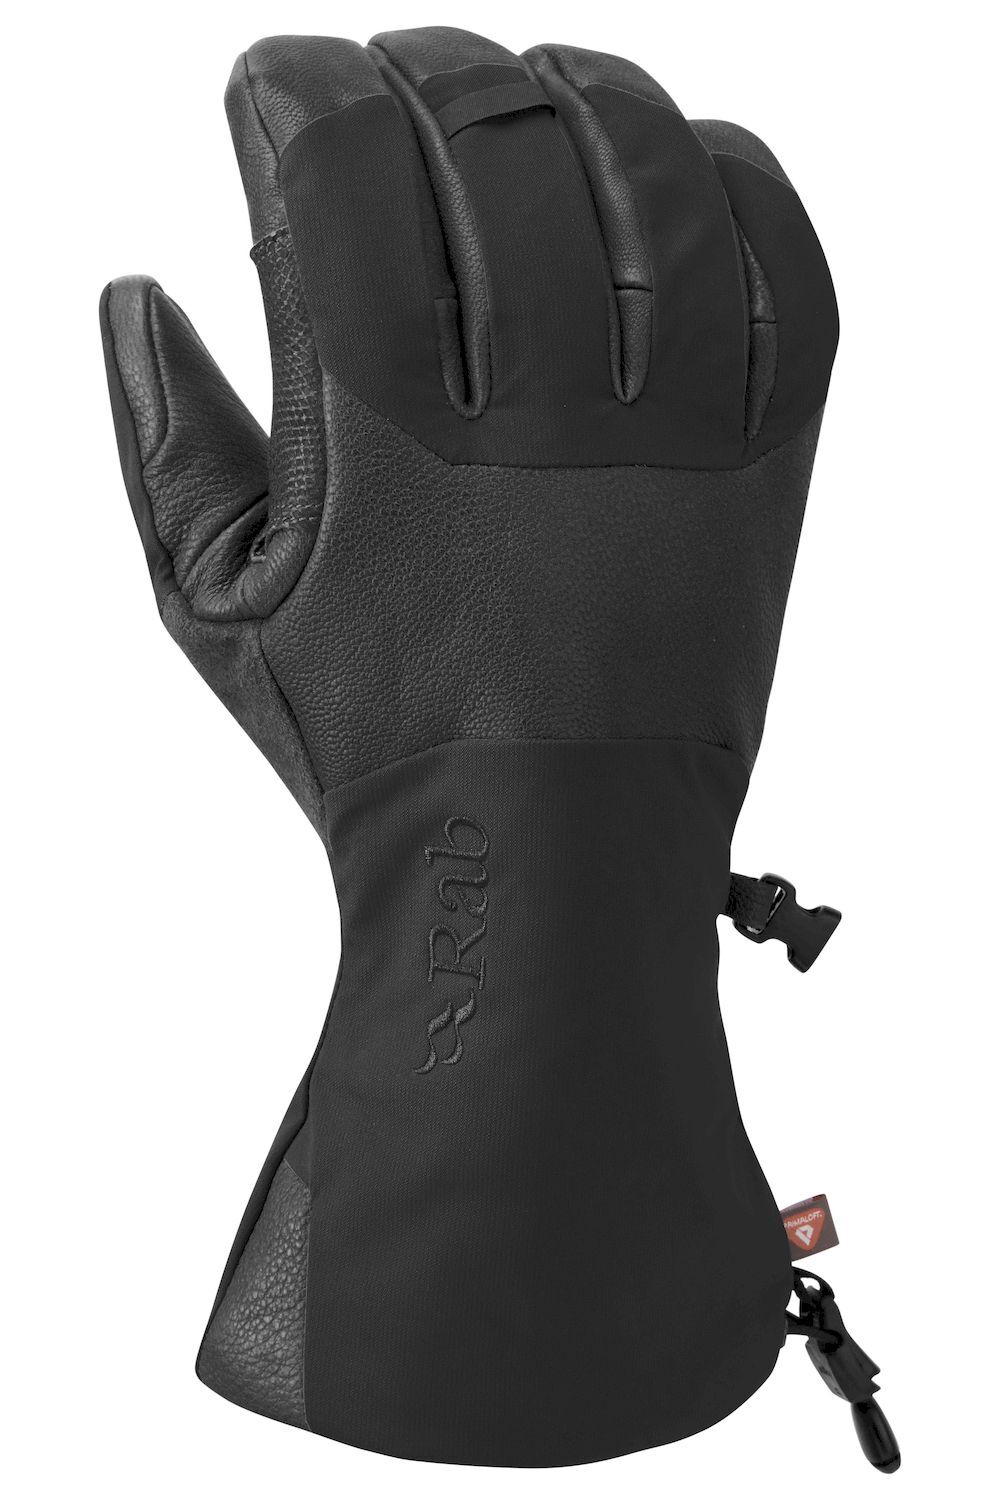 Rab Guide 2 GTX Gloves - Guanti